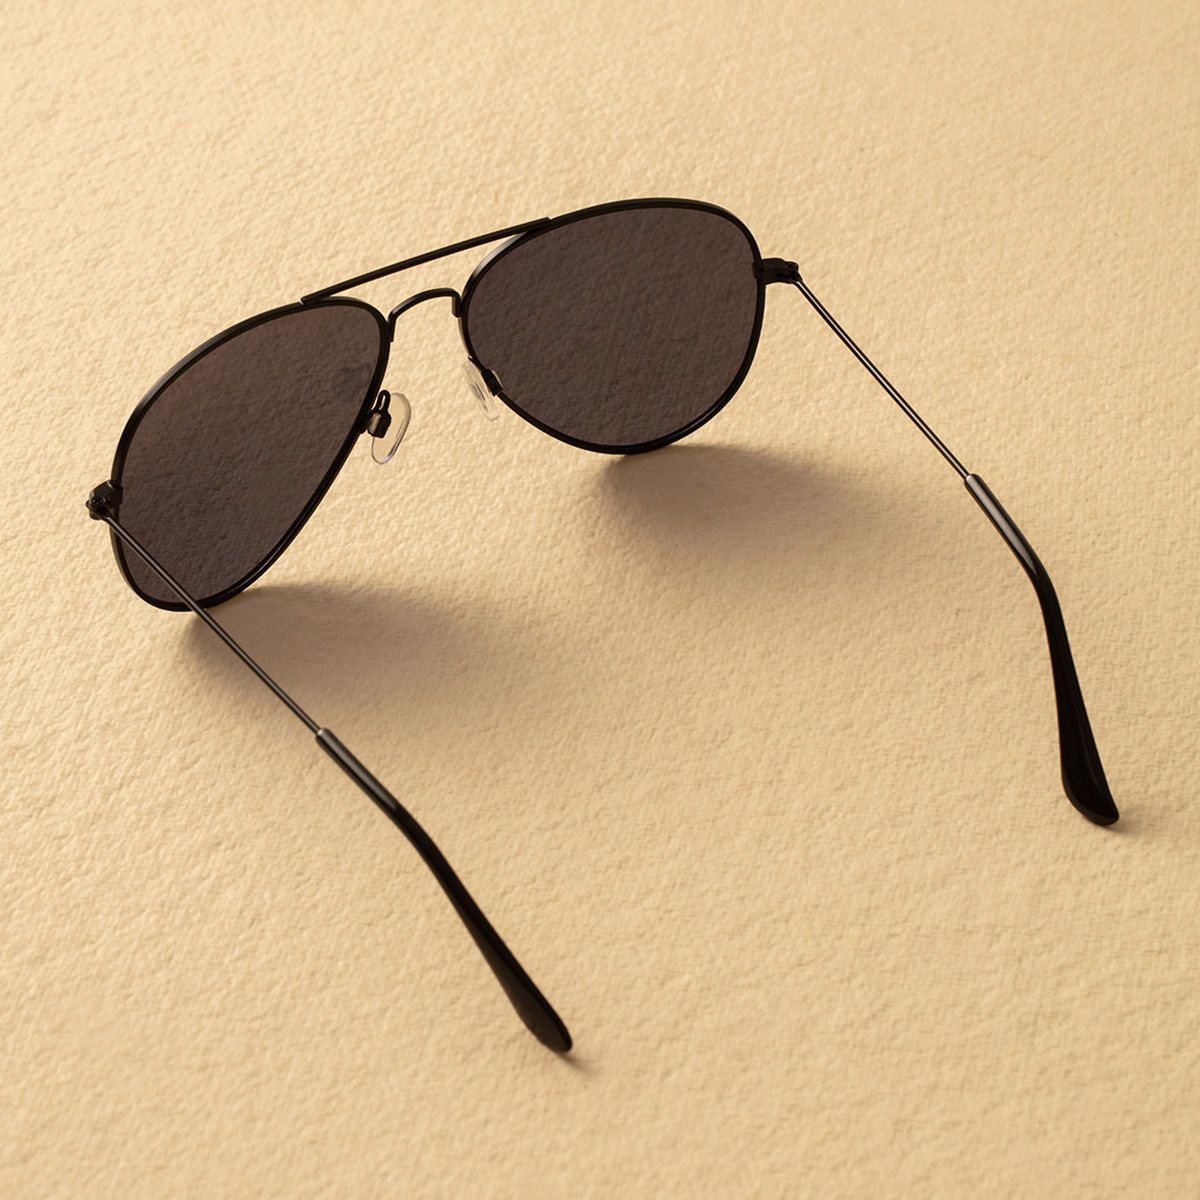 Statement Classic Black Aviator Sunglasses